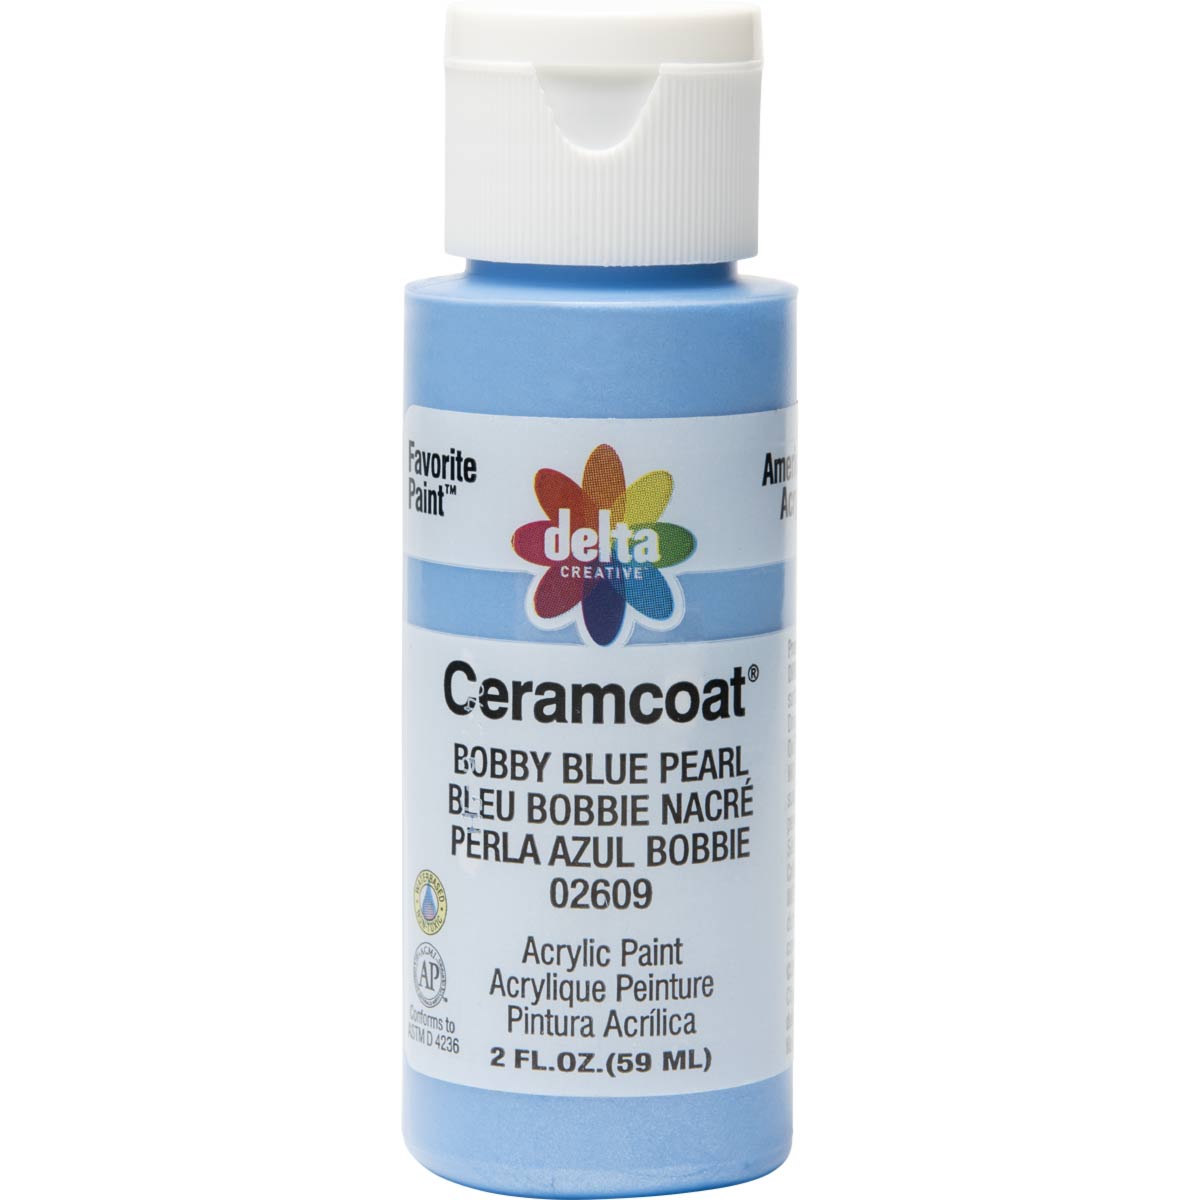 Delta Ceramcoat ® Acrylic Paint - Bobby Blue Pearl, 2 oz. - 026090202W